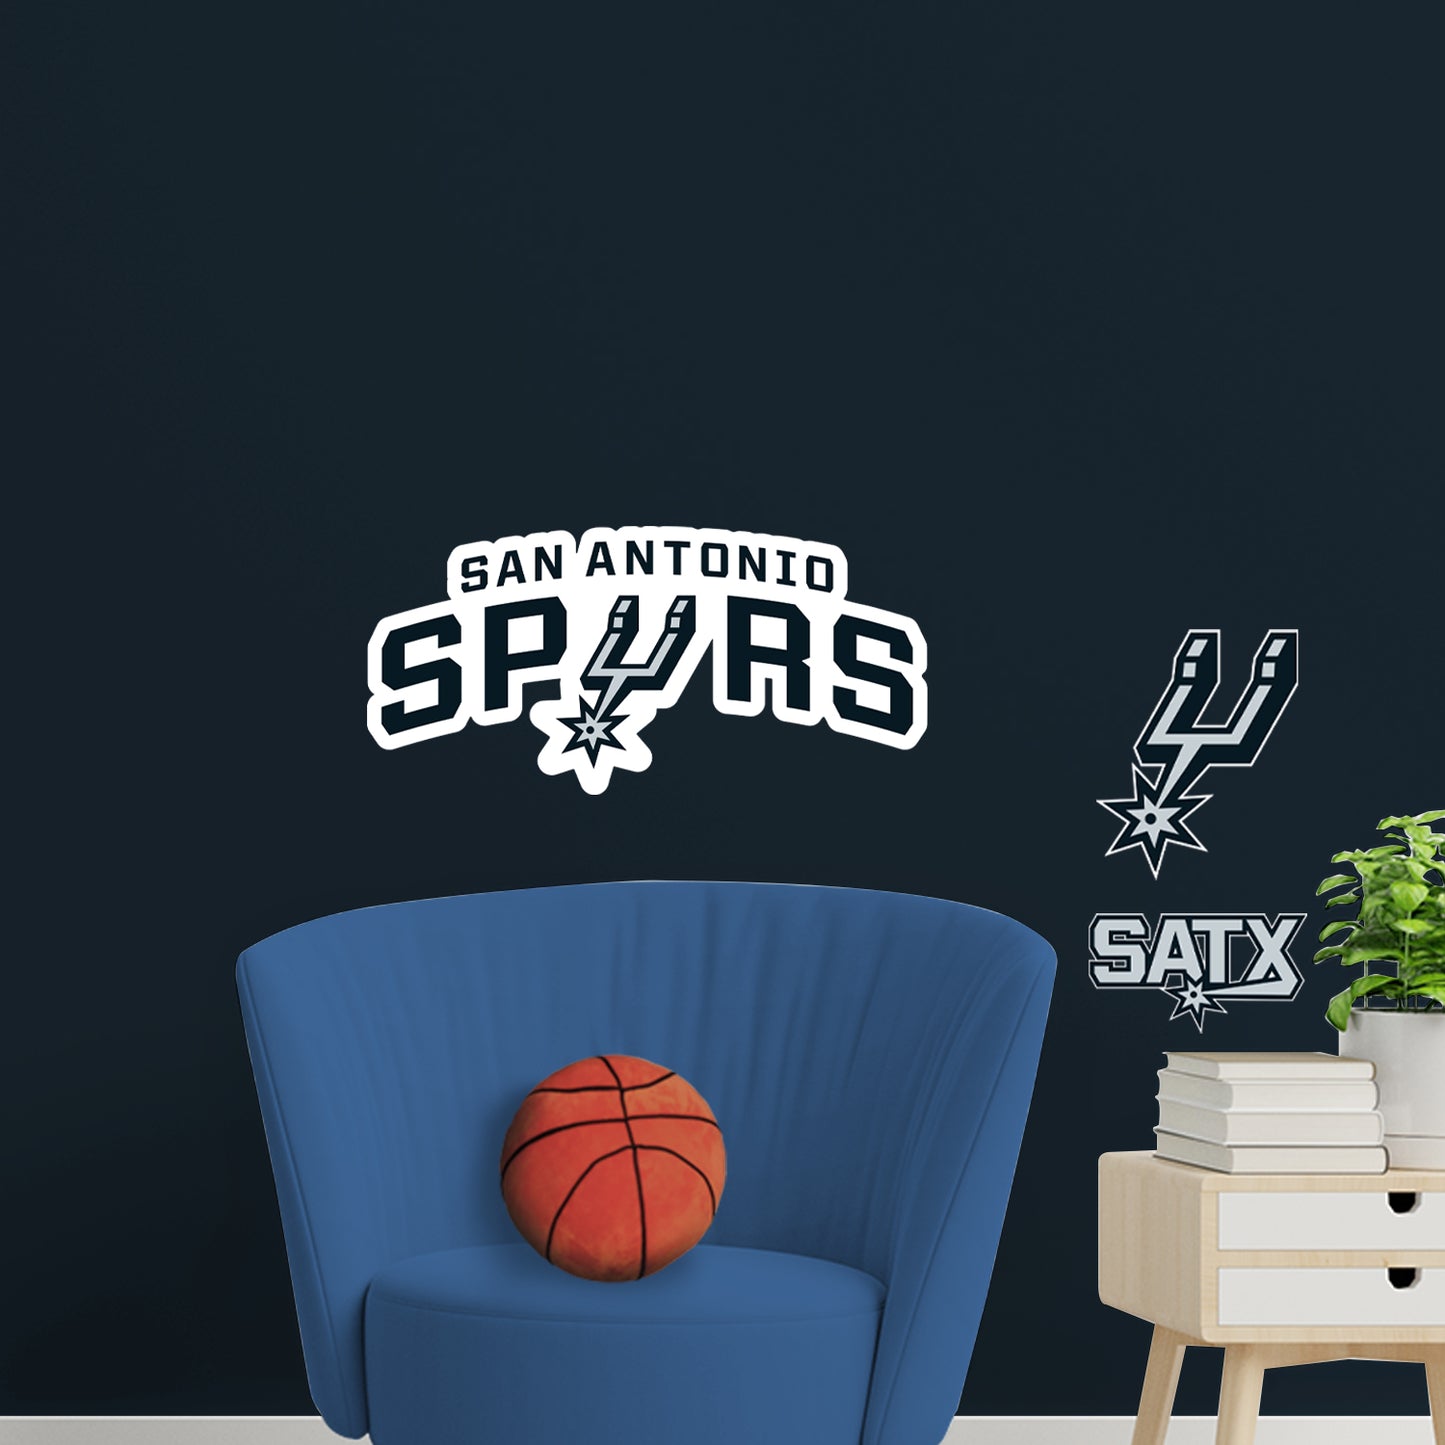 San Antonio Spurs: Address Block Logo - NBA Outdoor Graphic 8W x 6H